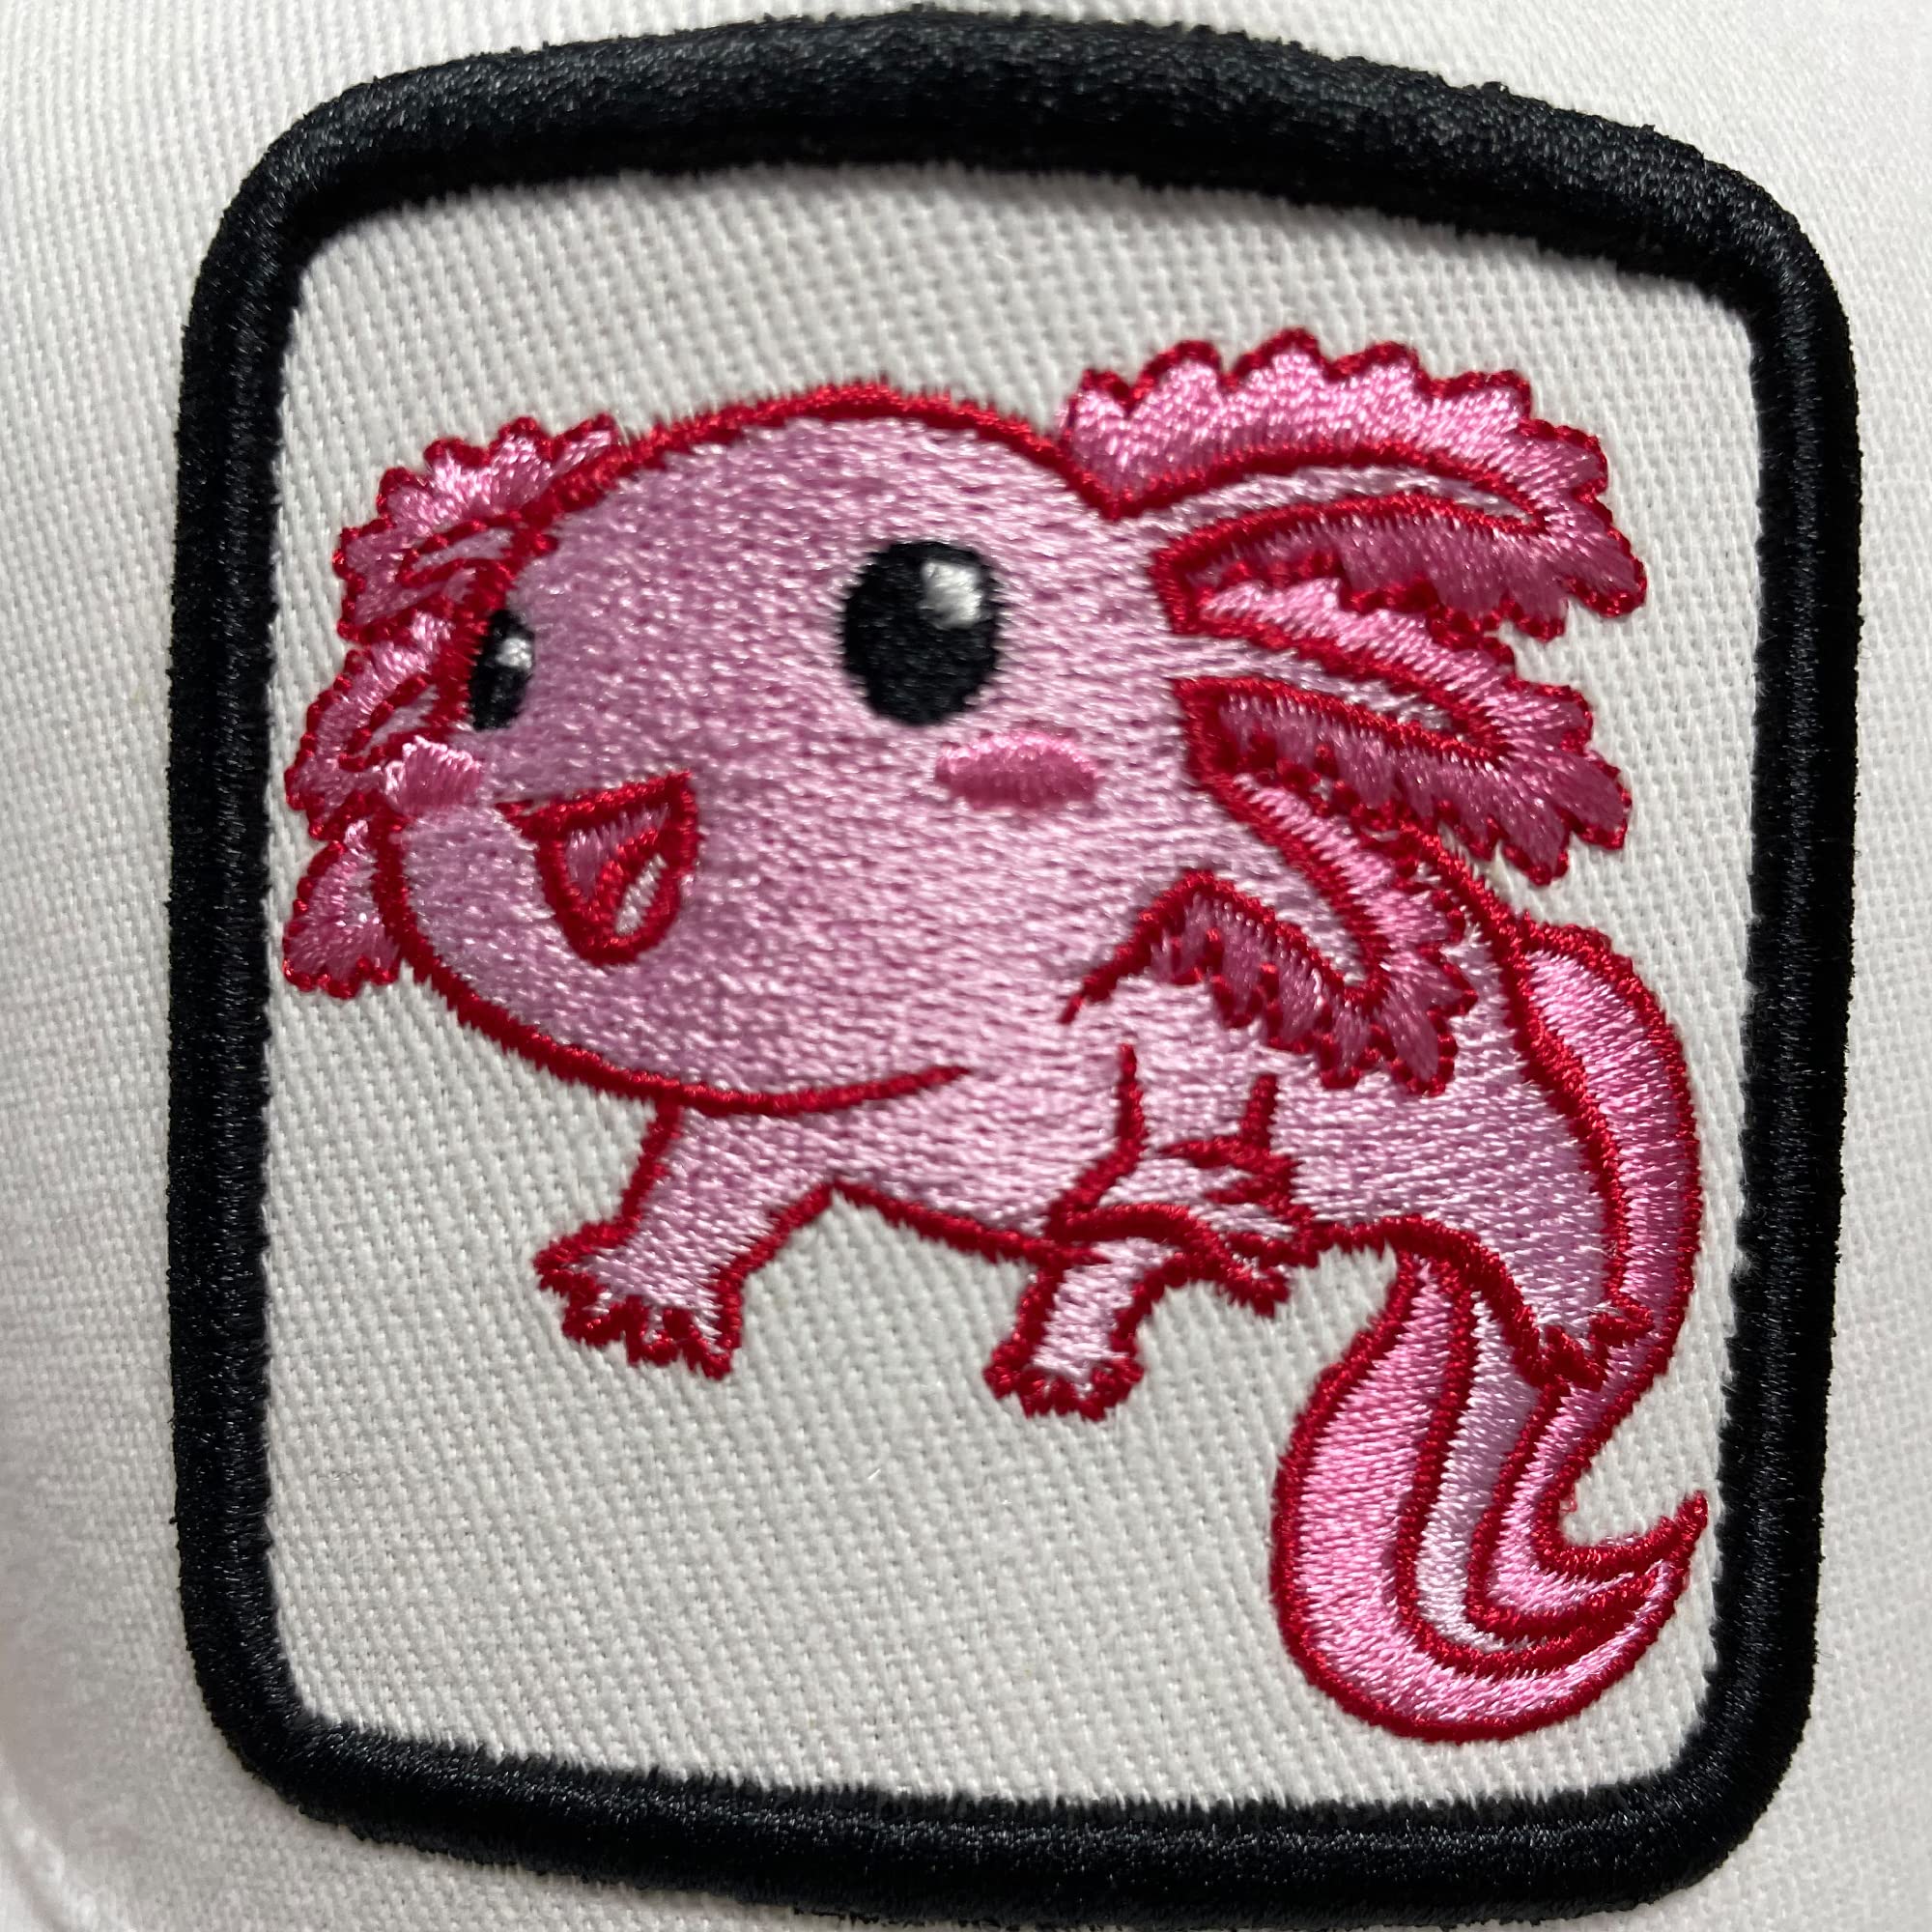 Mesh Trucker Hat Snapback Square Patch Baseball Caps - Axolotl